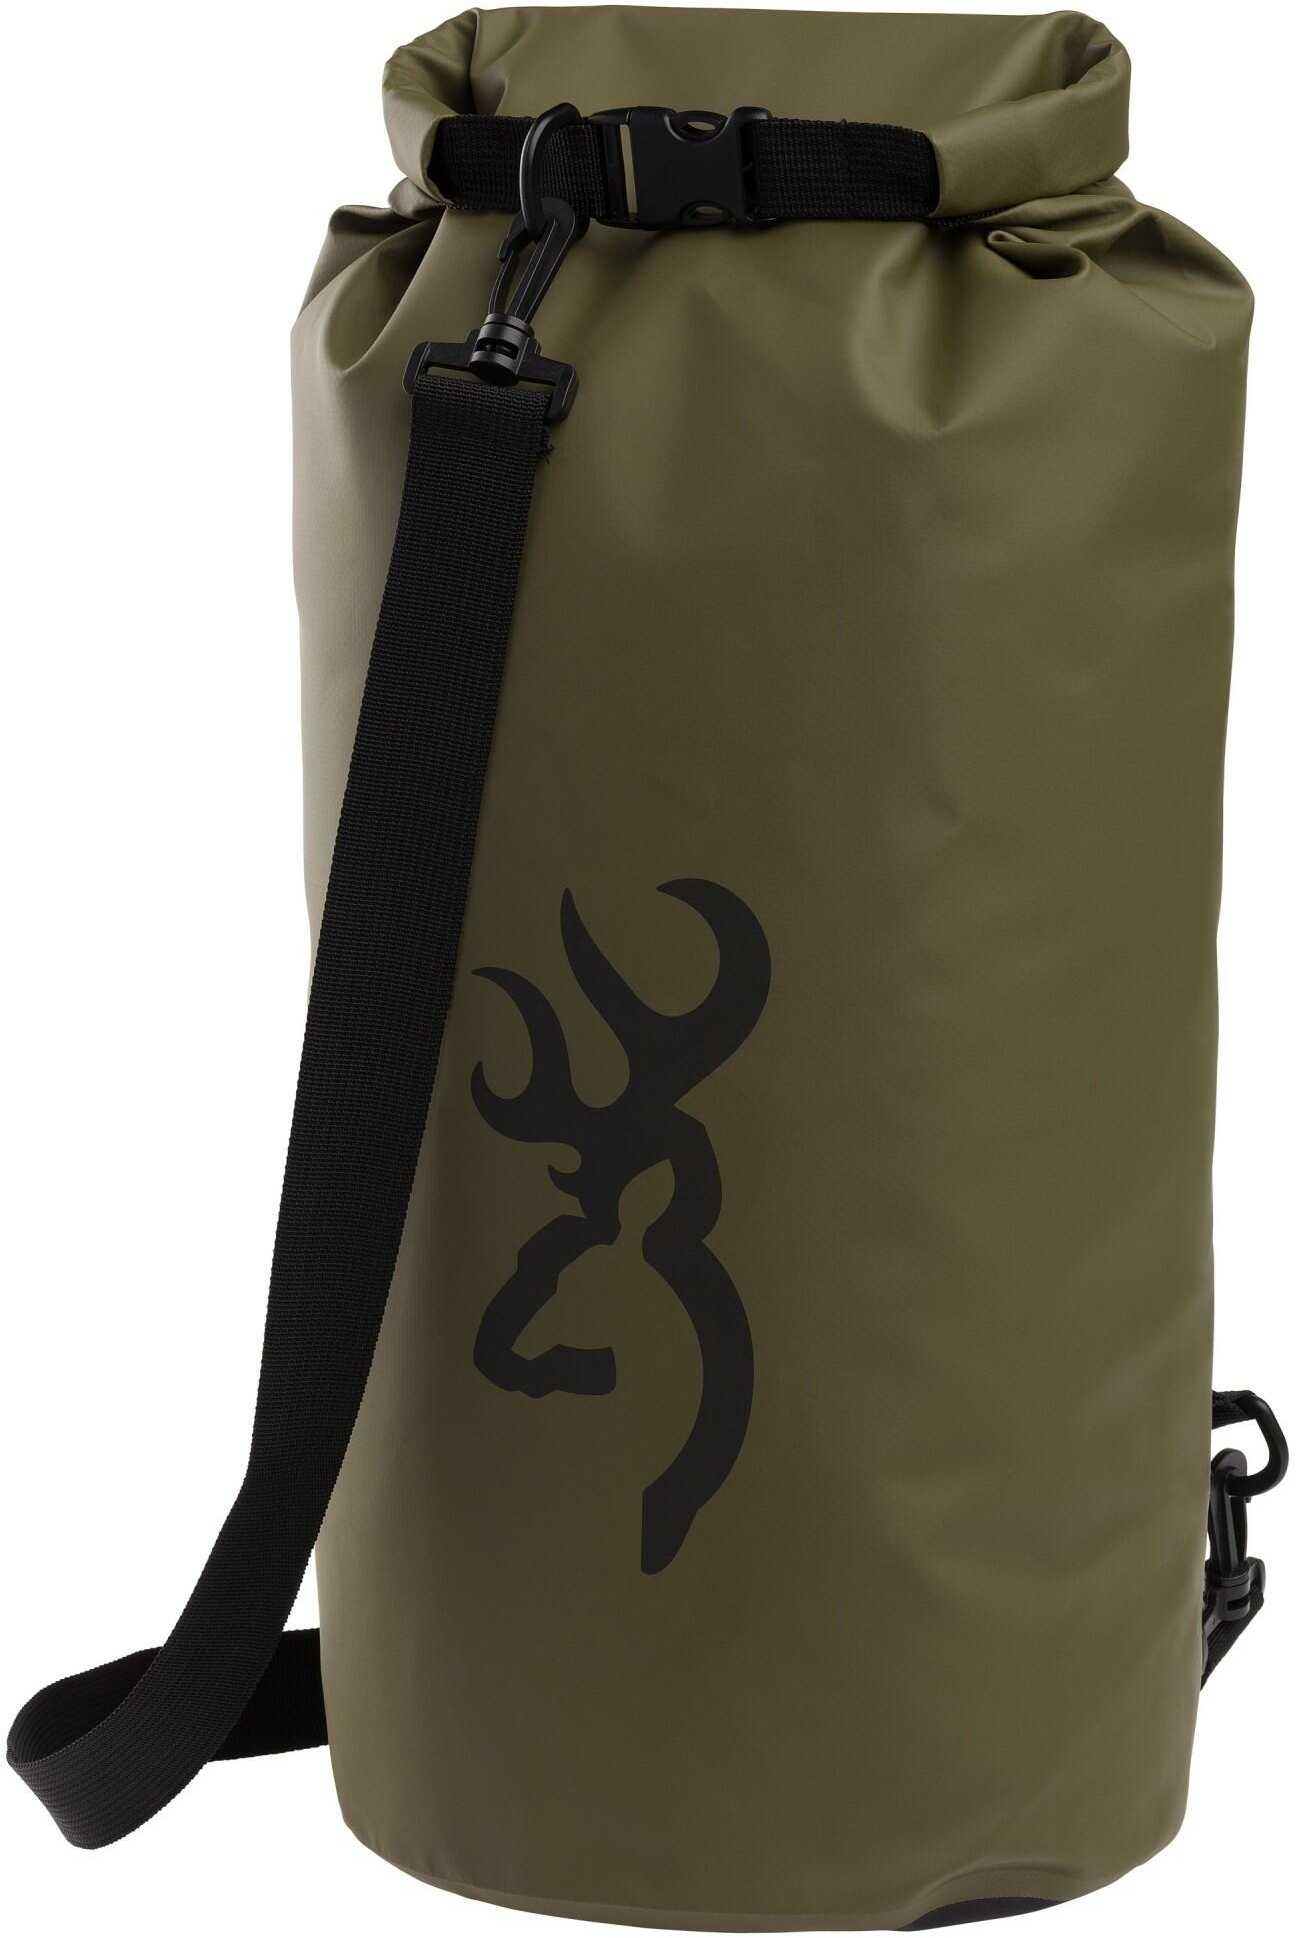 Browning Dry Ridge Bag Large 40L Olive